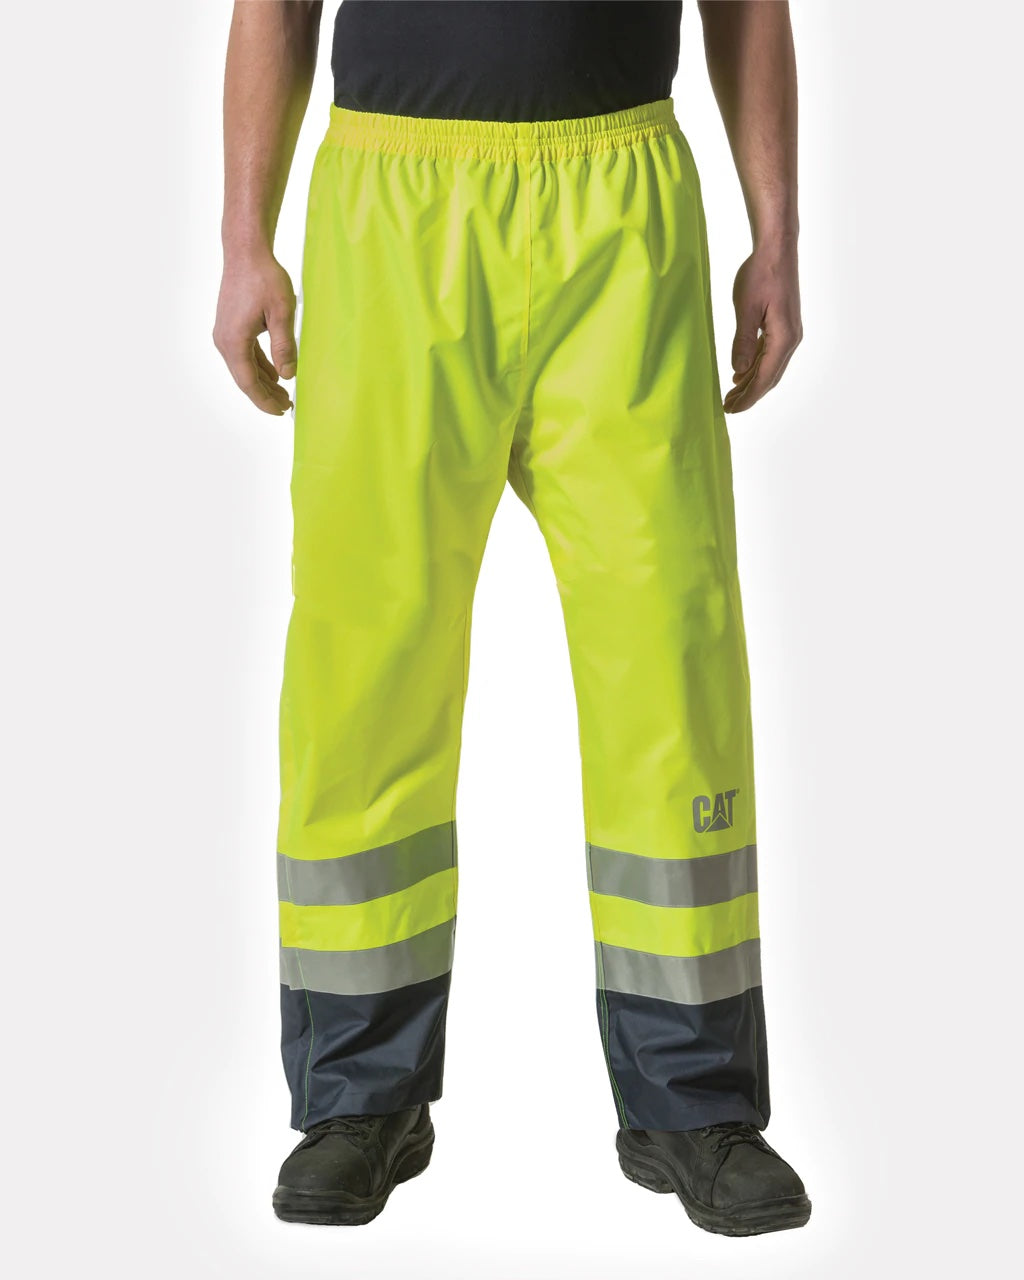 CAT Men's Hi-Vis Waterproof Pants - Work World - Workwear, Work Boots, Safety Gear